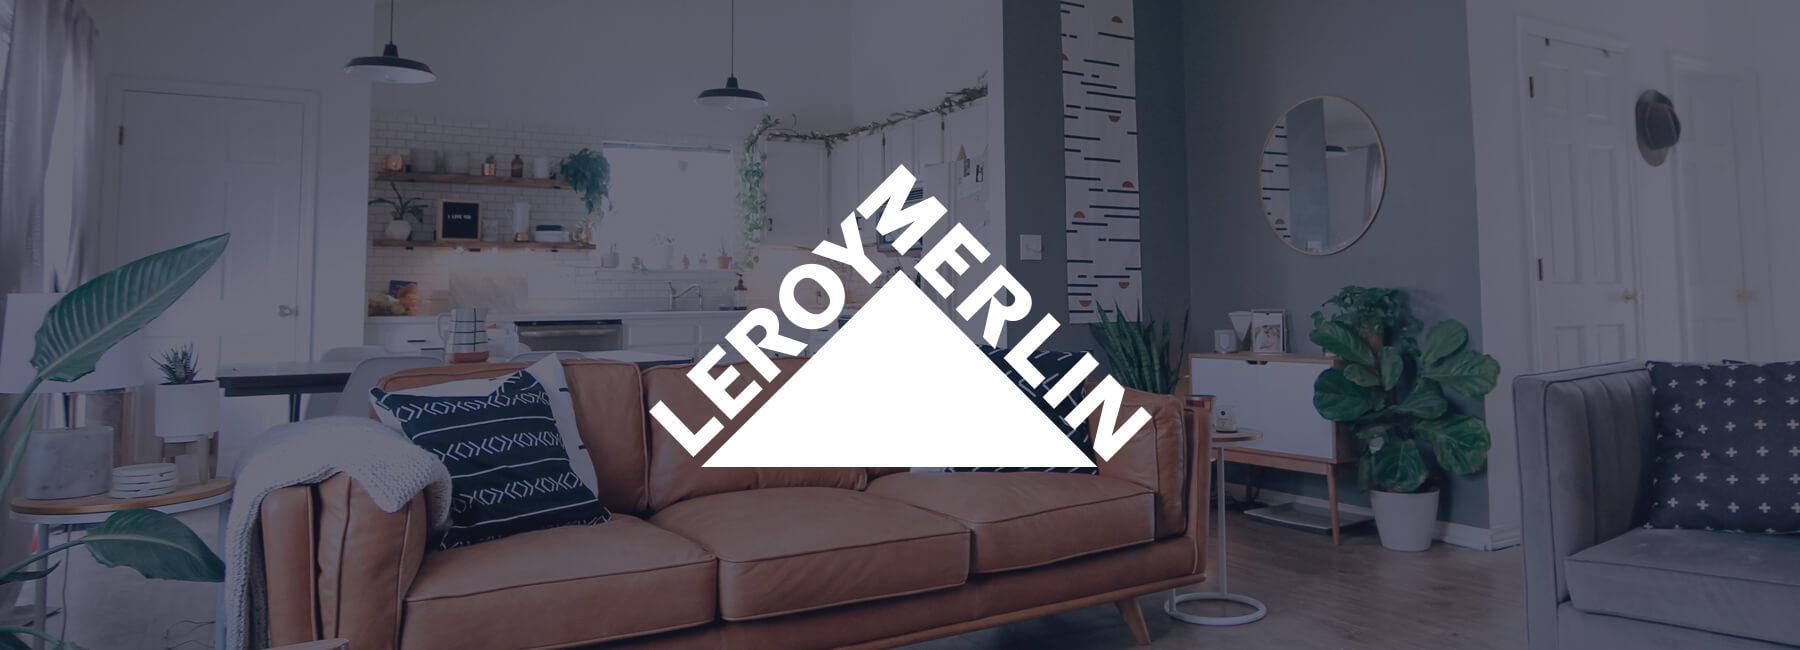 Leroy Merlin chooses Mopinion to shape online VoC programme